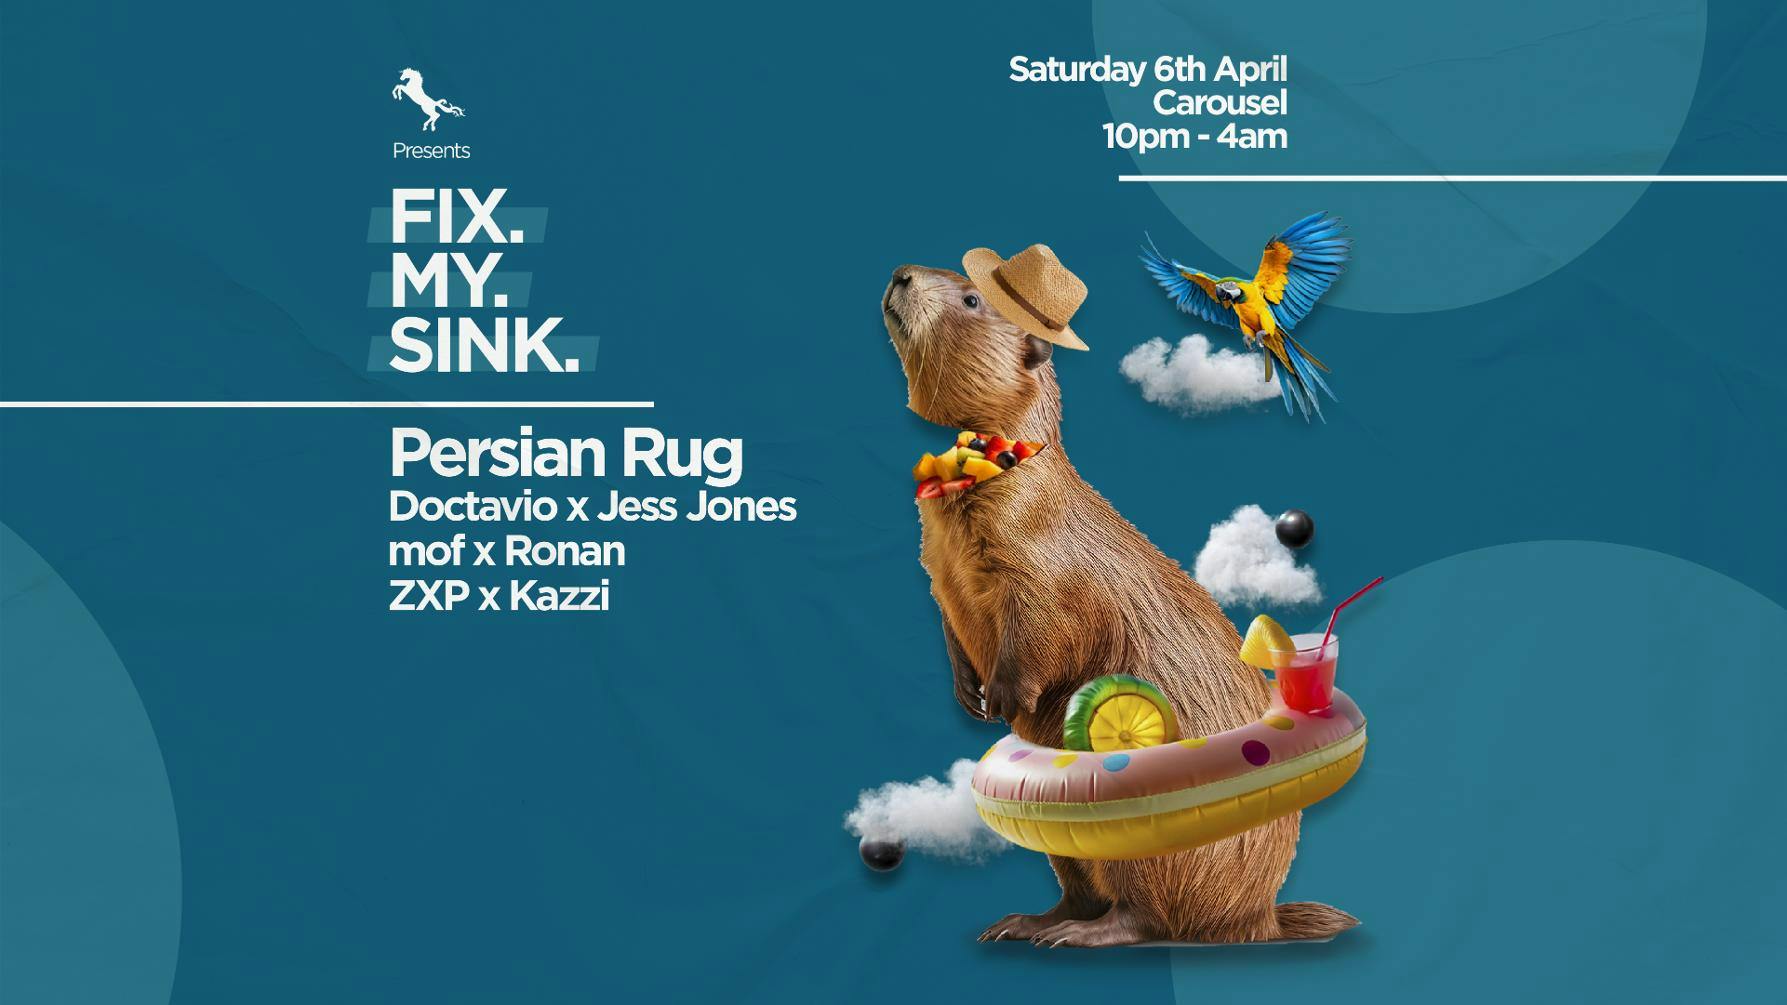 ╬ FIX MY SINK ╬ Persian Rug ╬ Saturday April 6th ╬